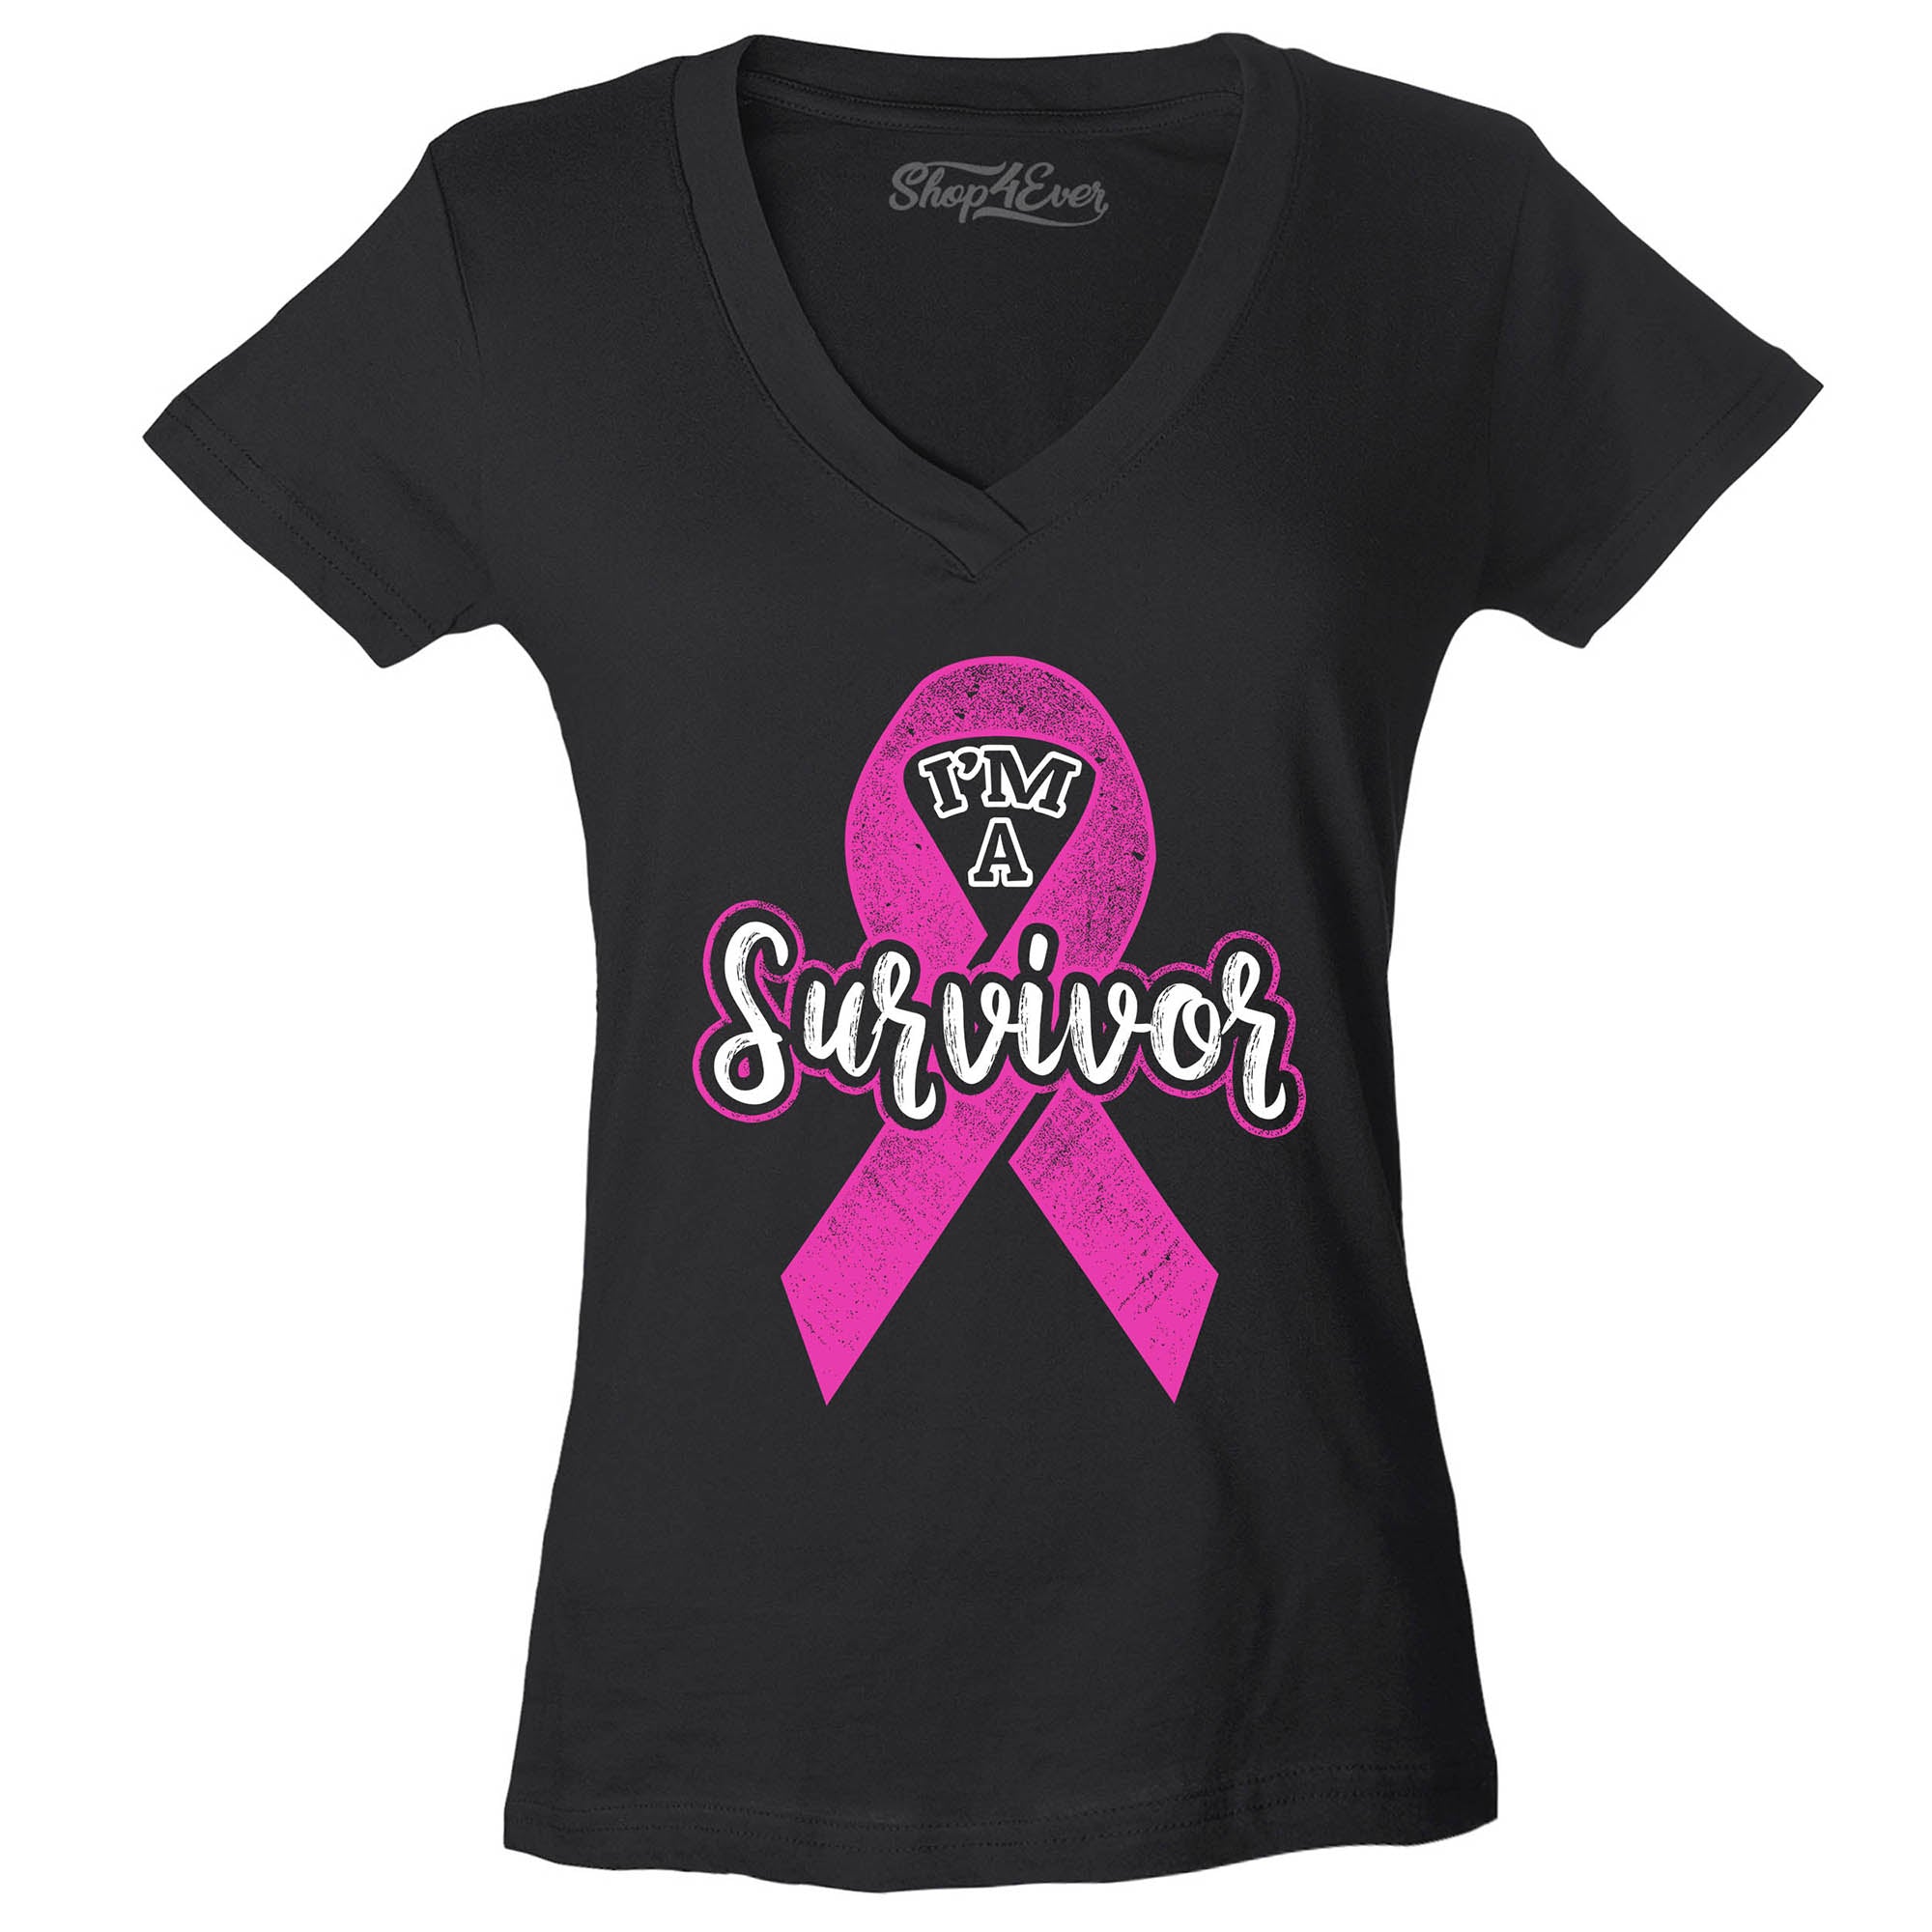 I'm A Survivor Breast Cancer Awareness Women's V-Neck T-Shirt Pink Ribbon Shirts Slim Fit